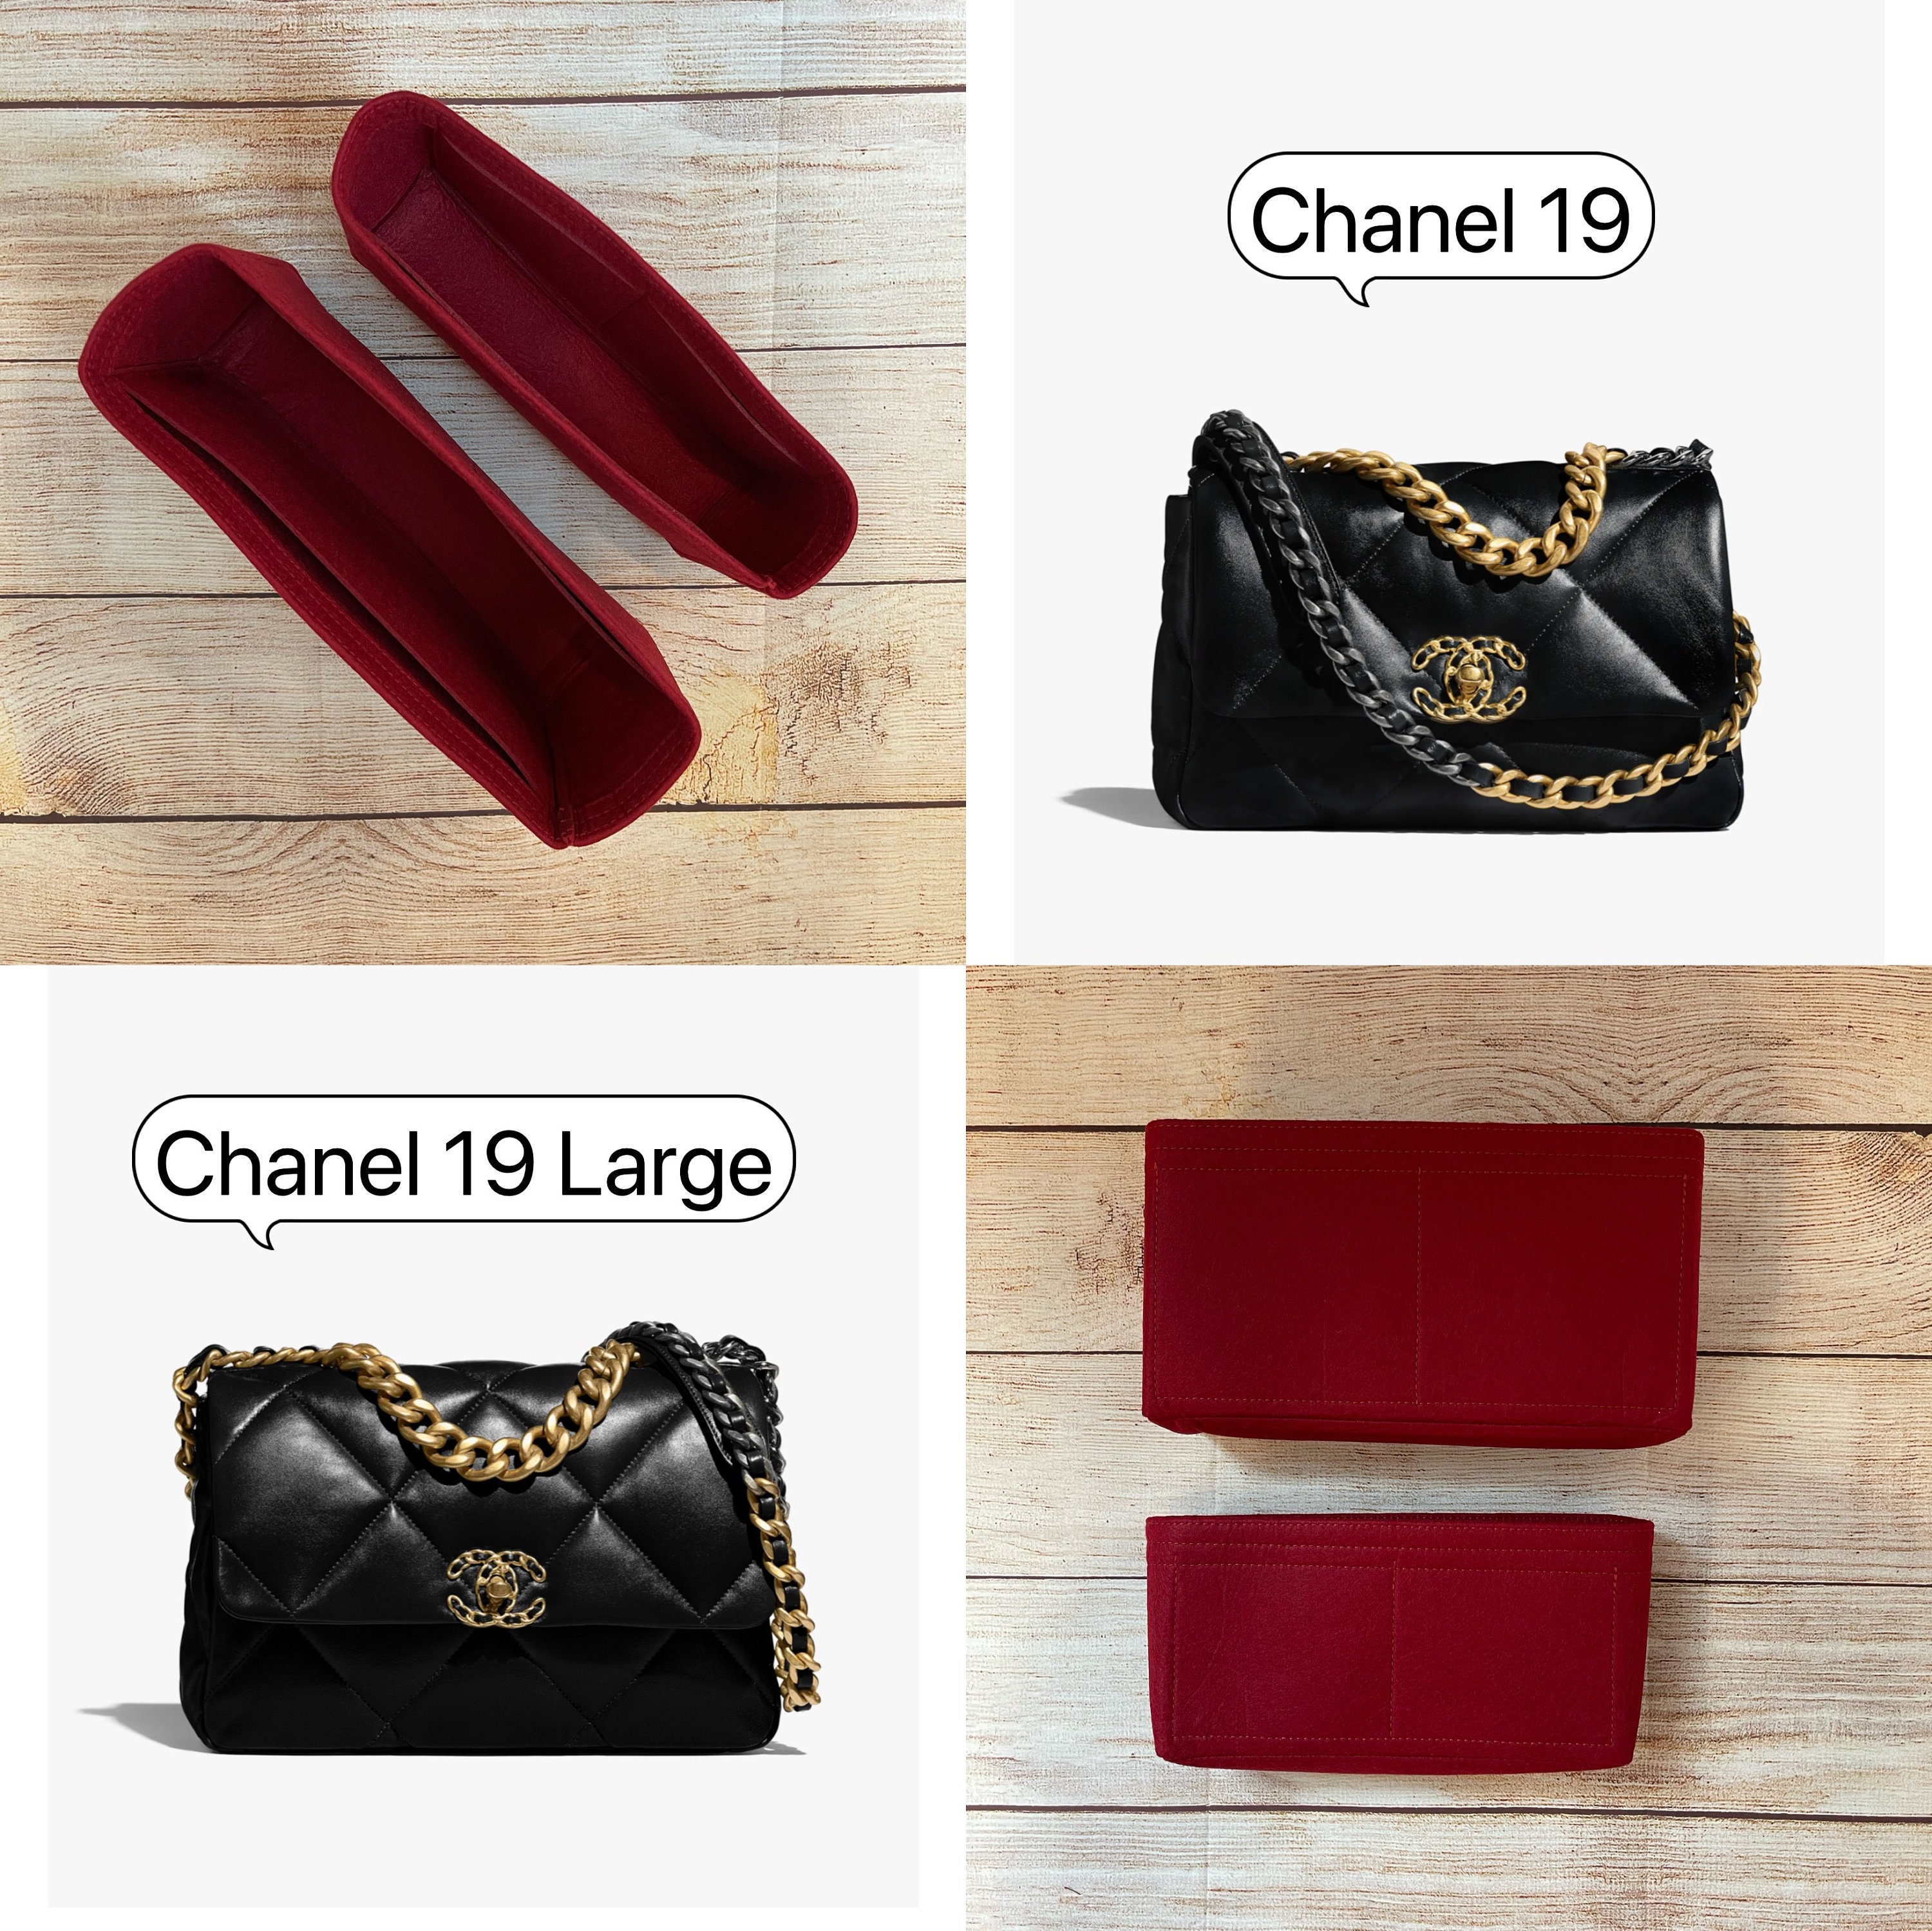 Chanel 19 Bag Insert 